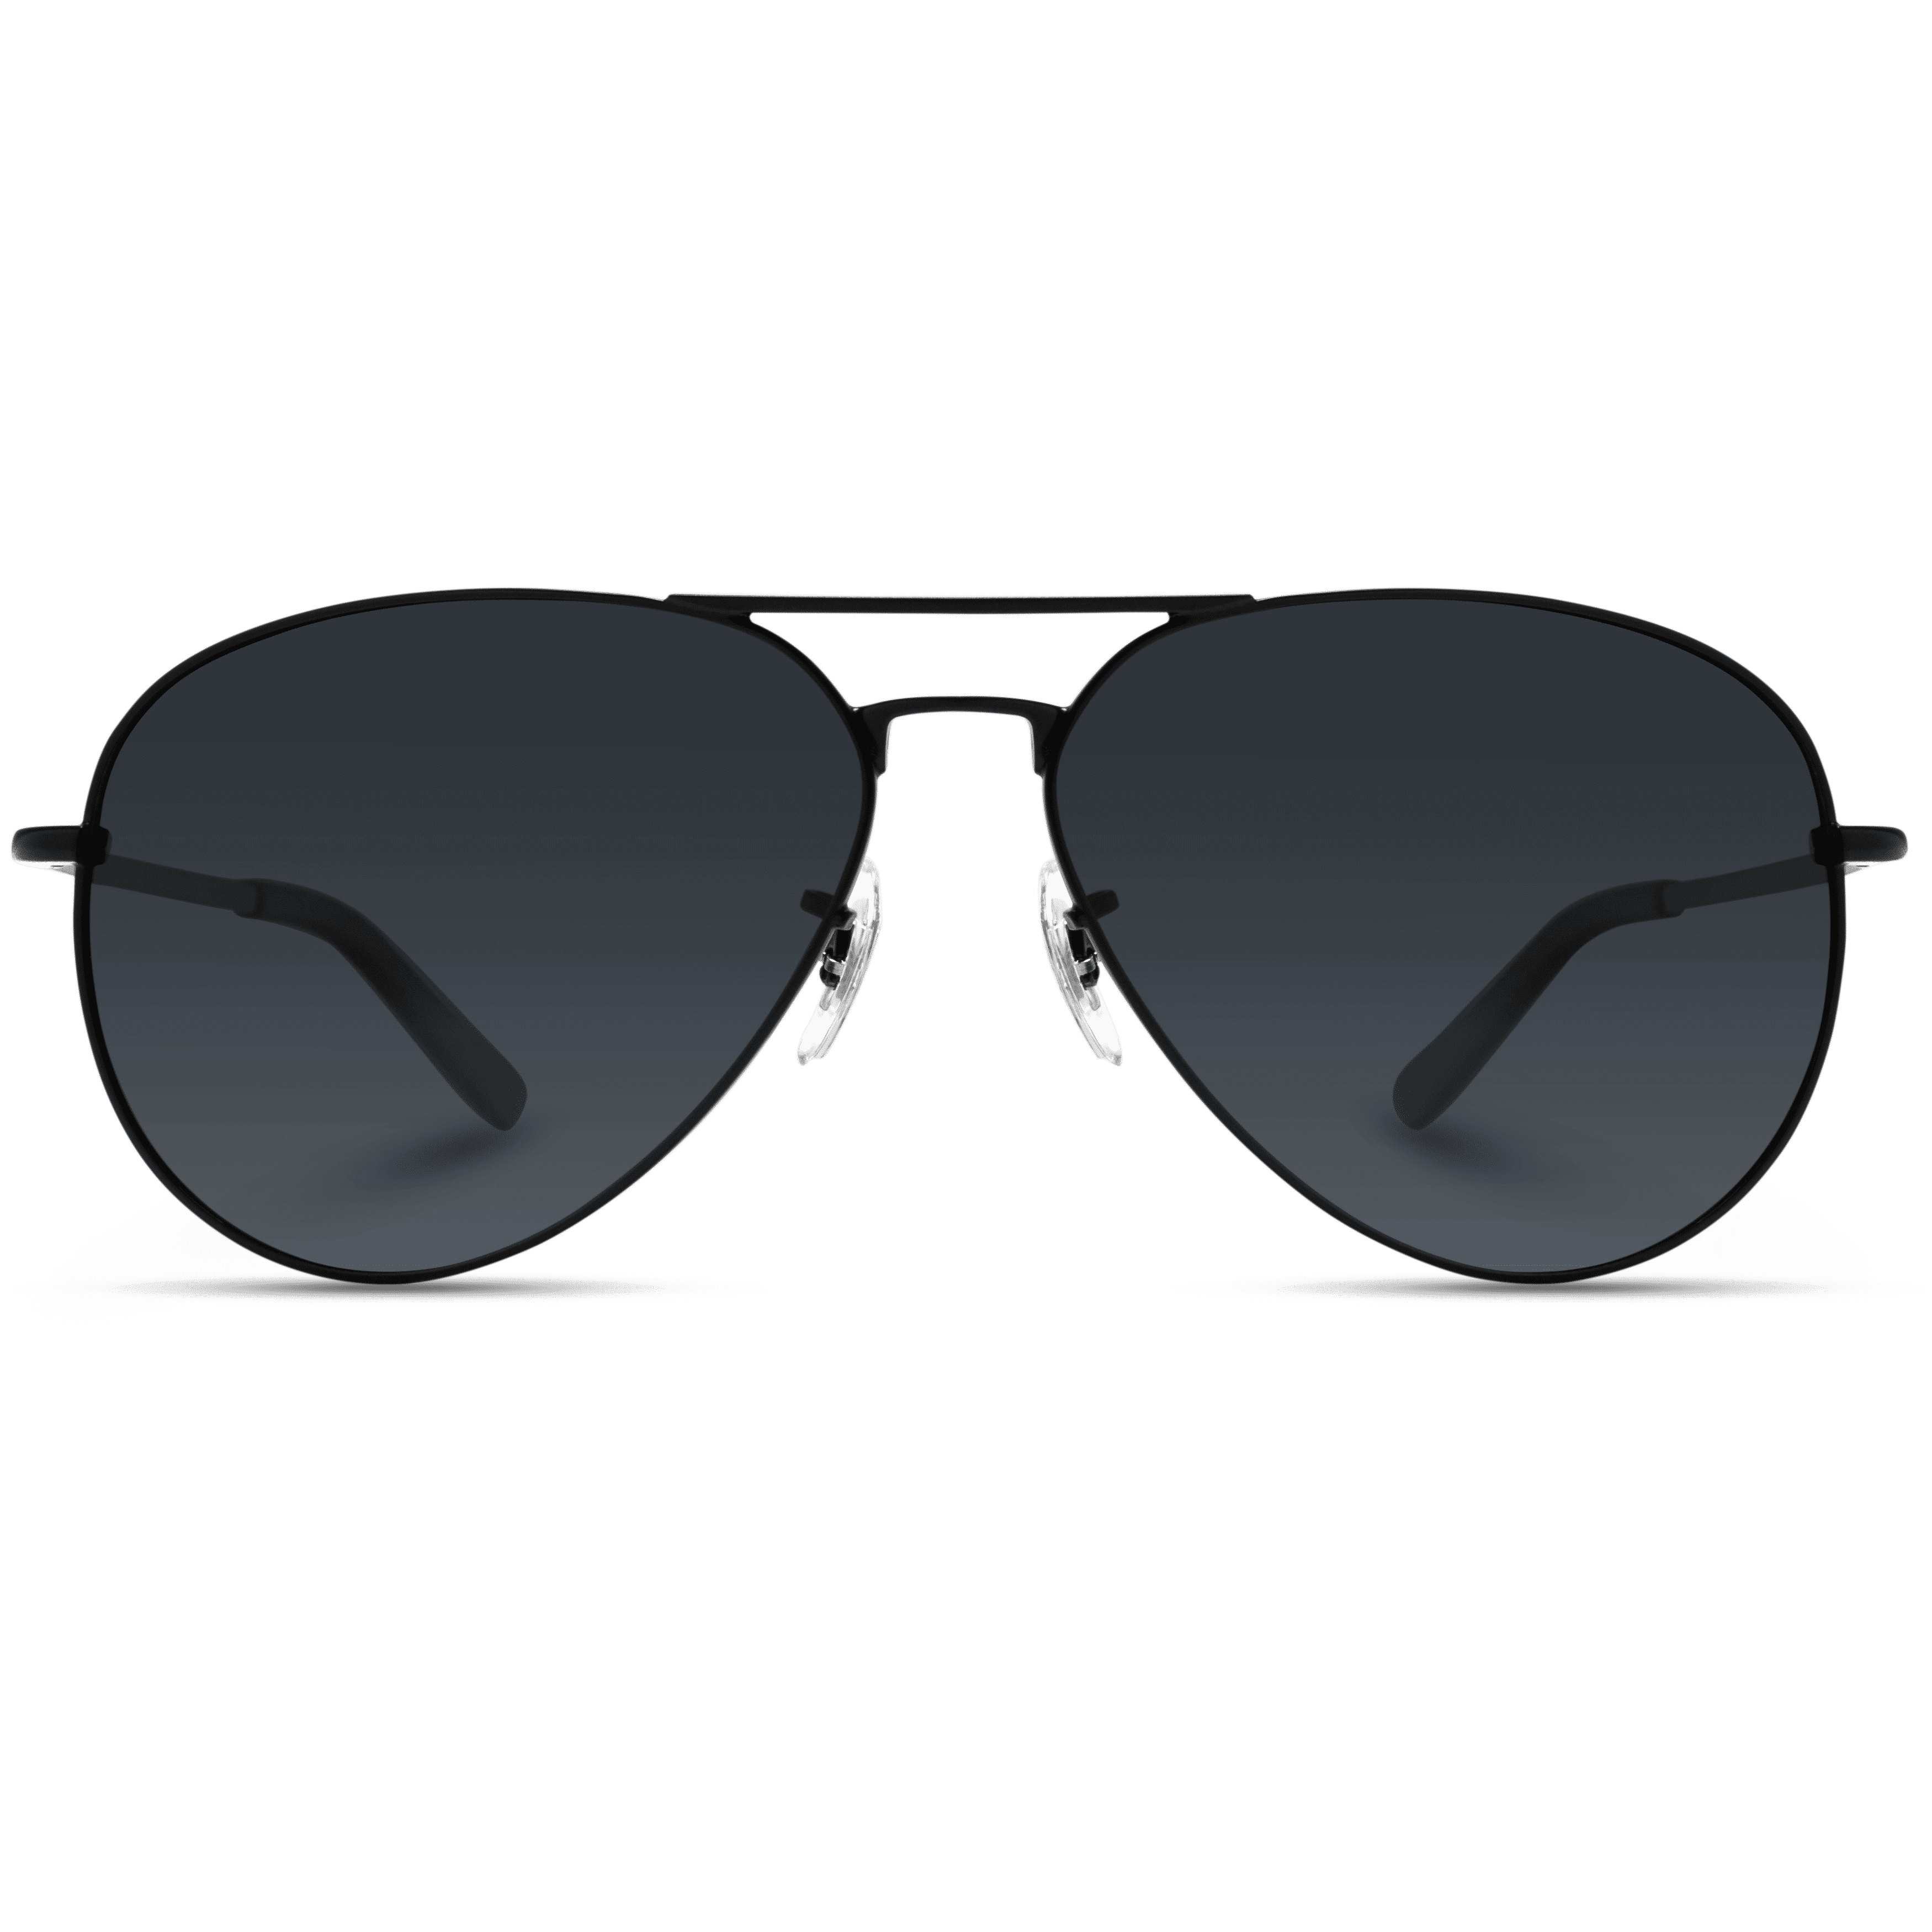 Wearme Pro Classic Full Black Polarized Lens Metal Frame Men Aviator Style Sunglasses